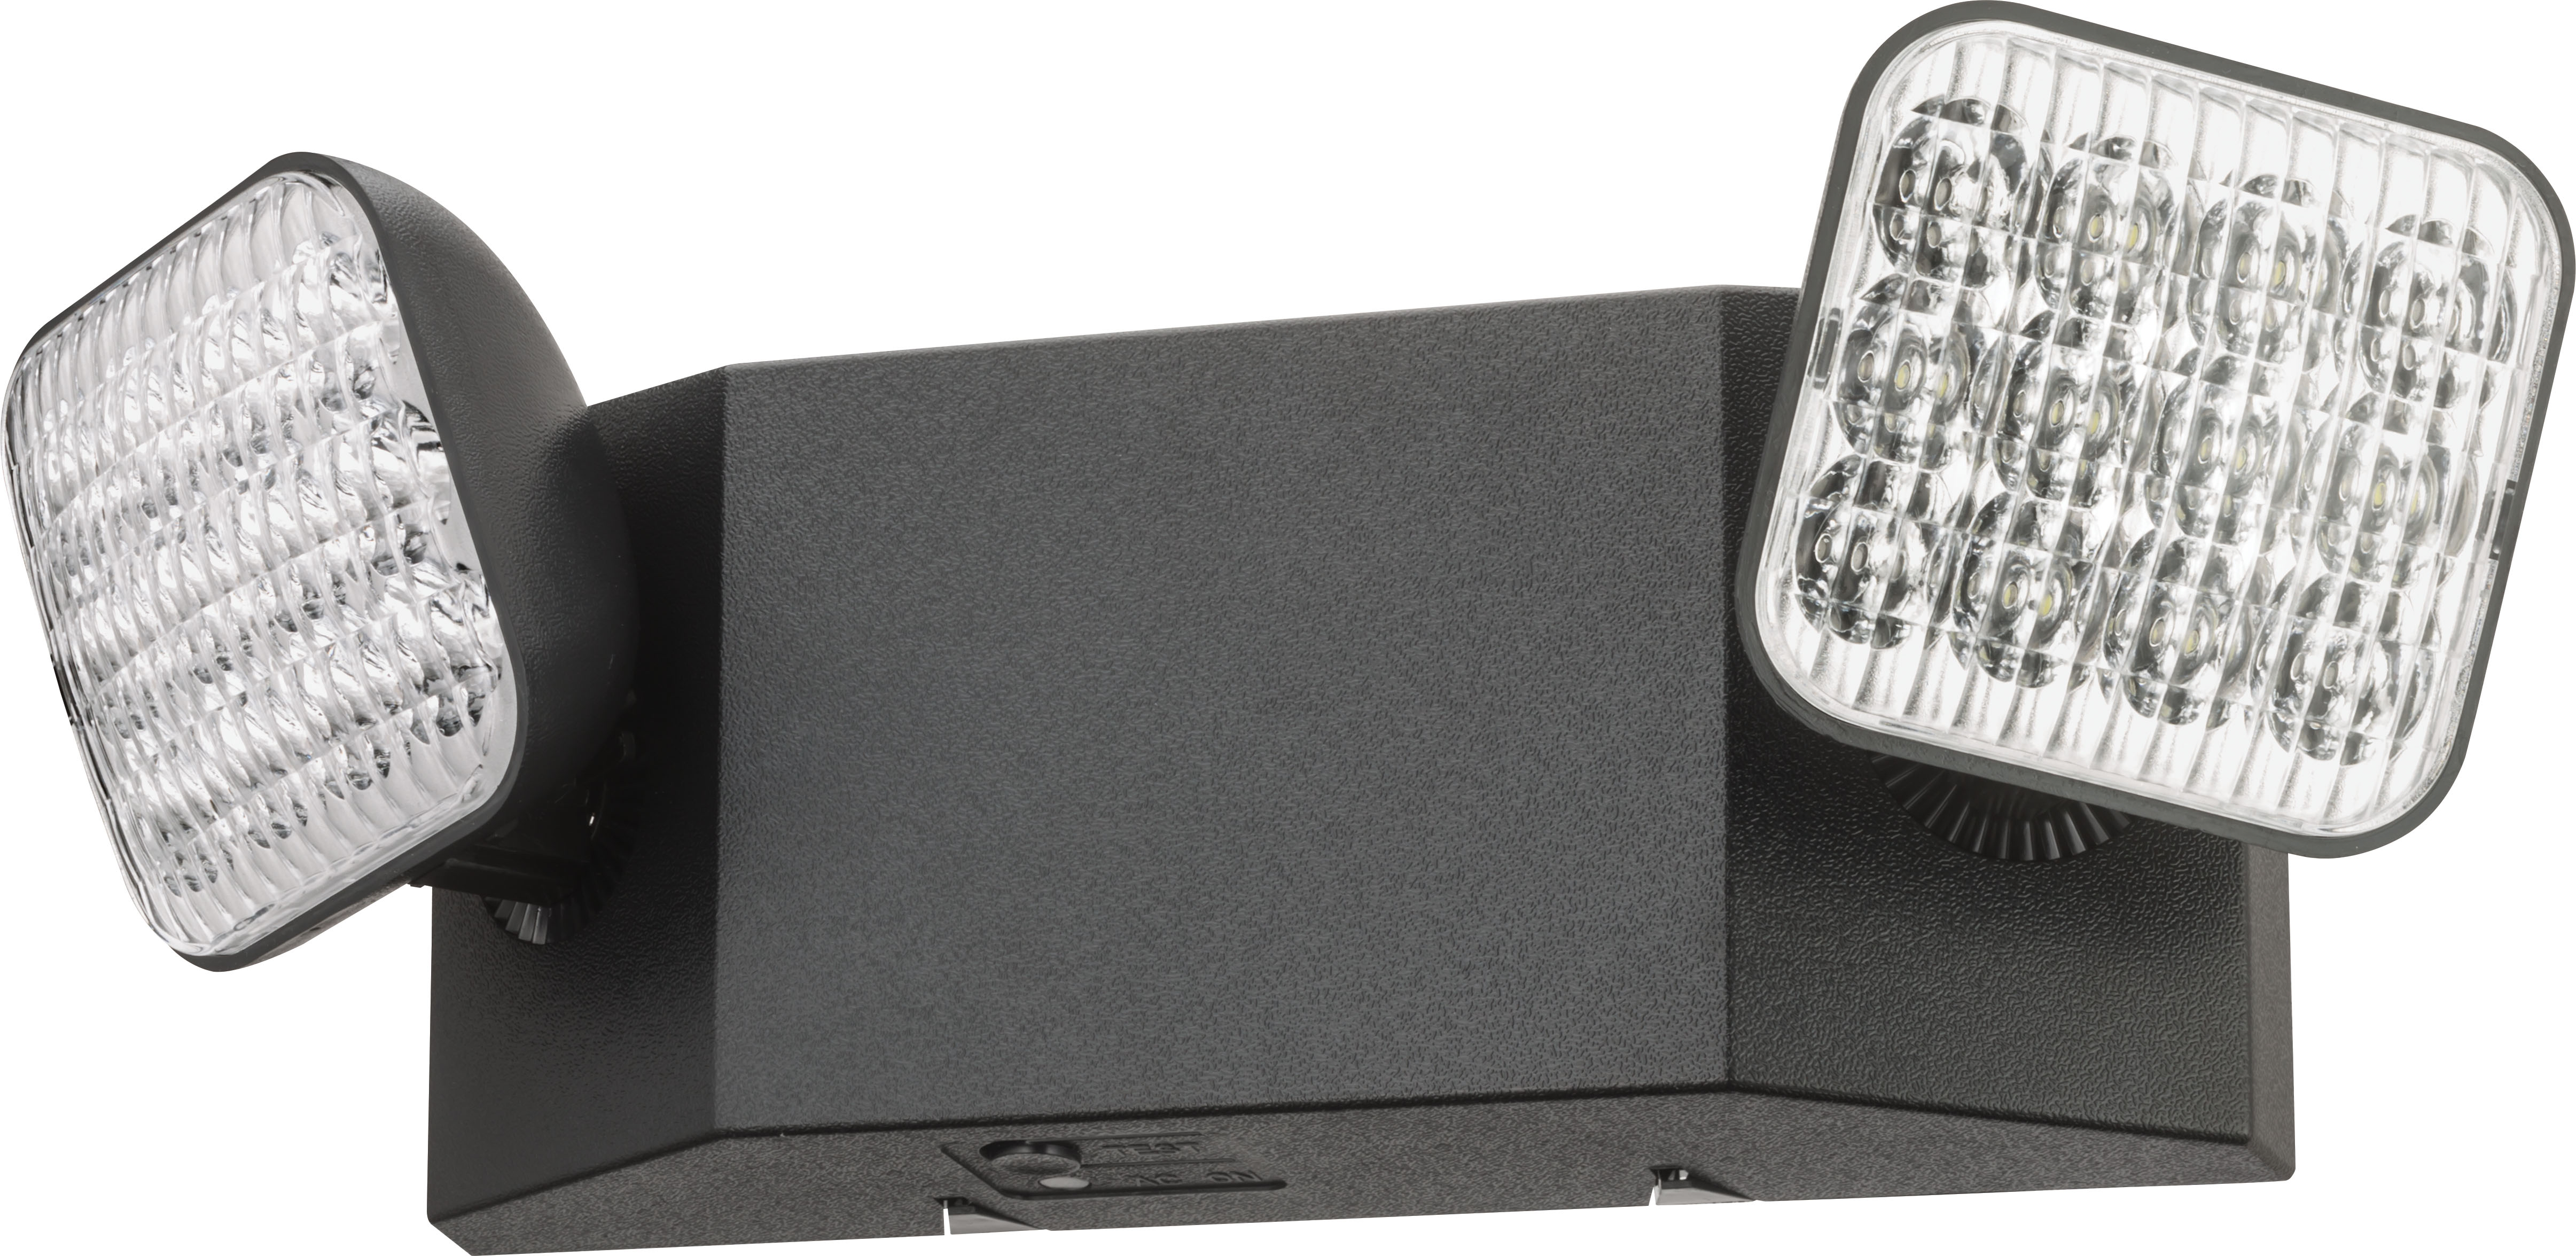 Generation 3 Lithonia Lighting EU2C M6 Emergency Light T20 Compliant